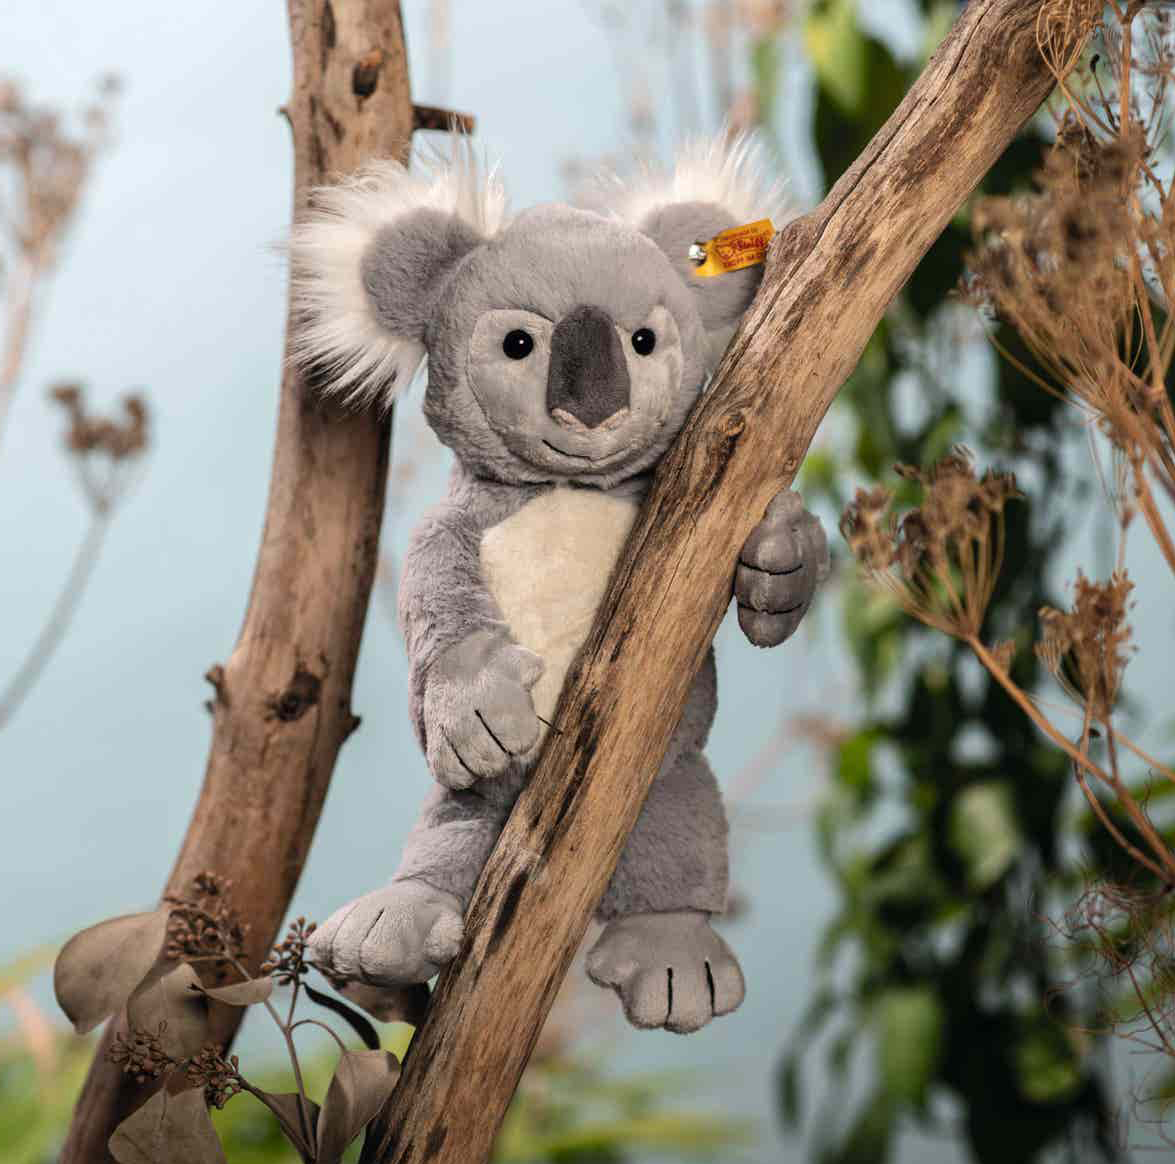 Steiff Koala Nils, Soft Cuddly Friends - Steiff